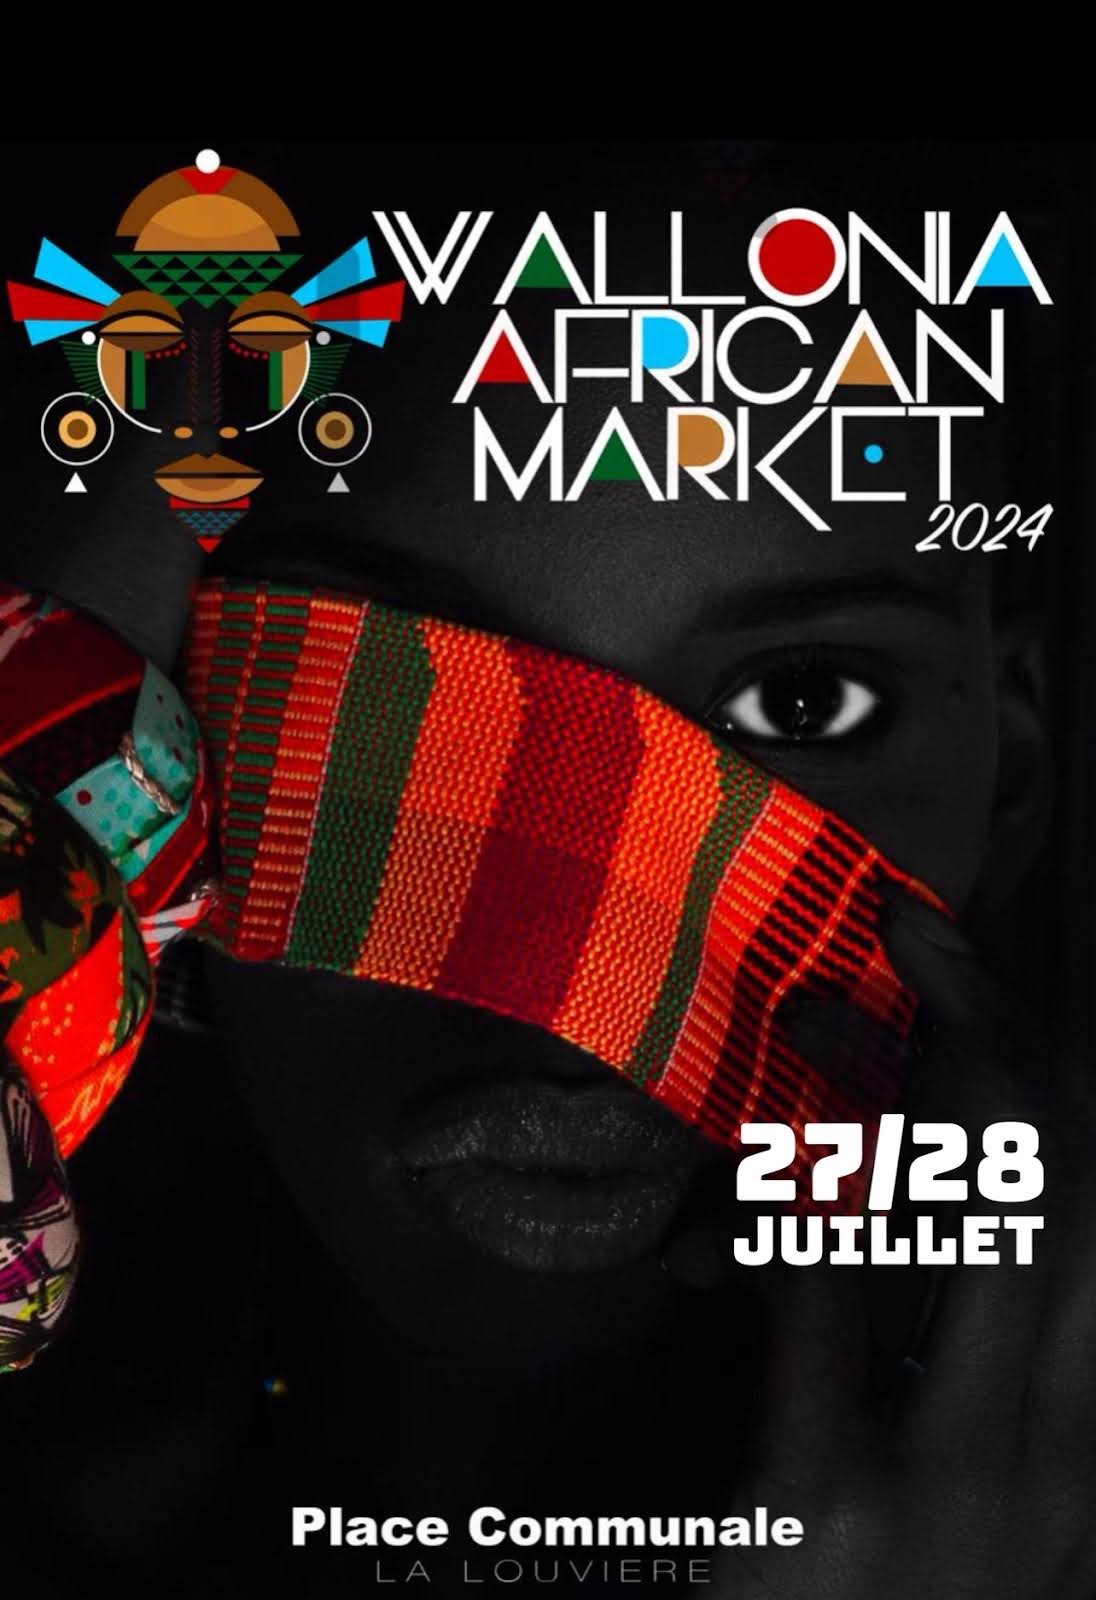 Wallonia African Market